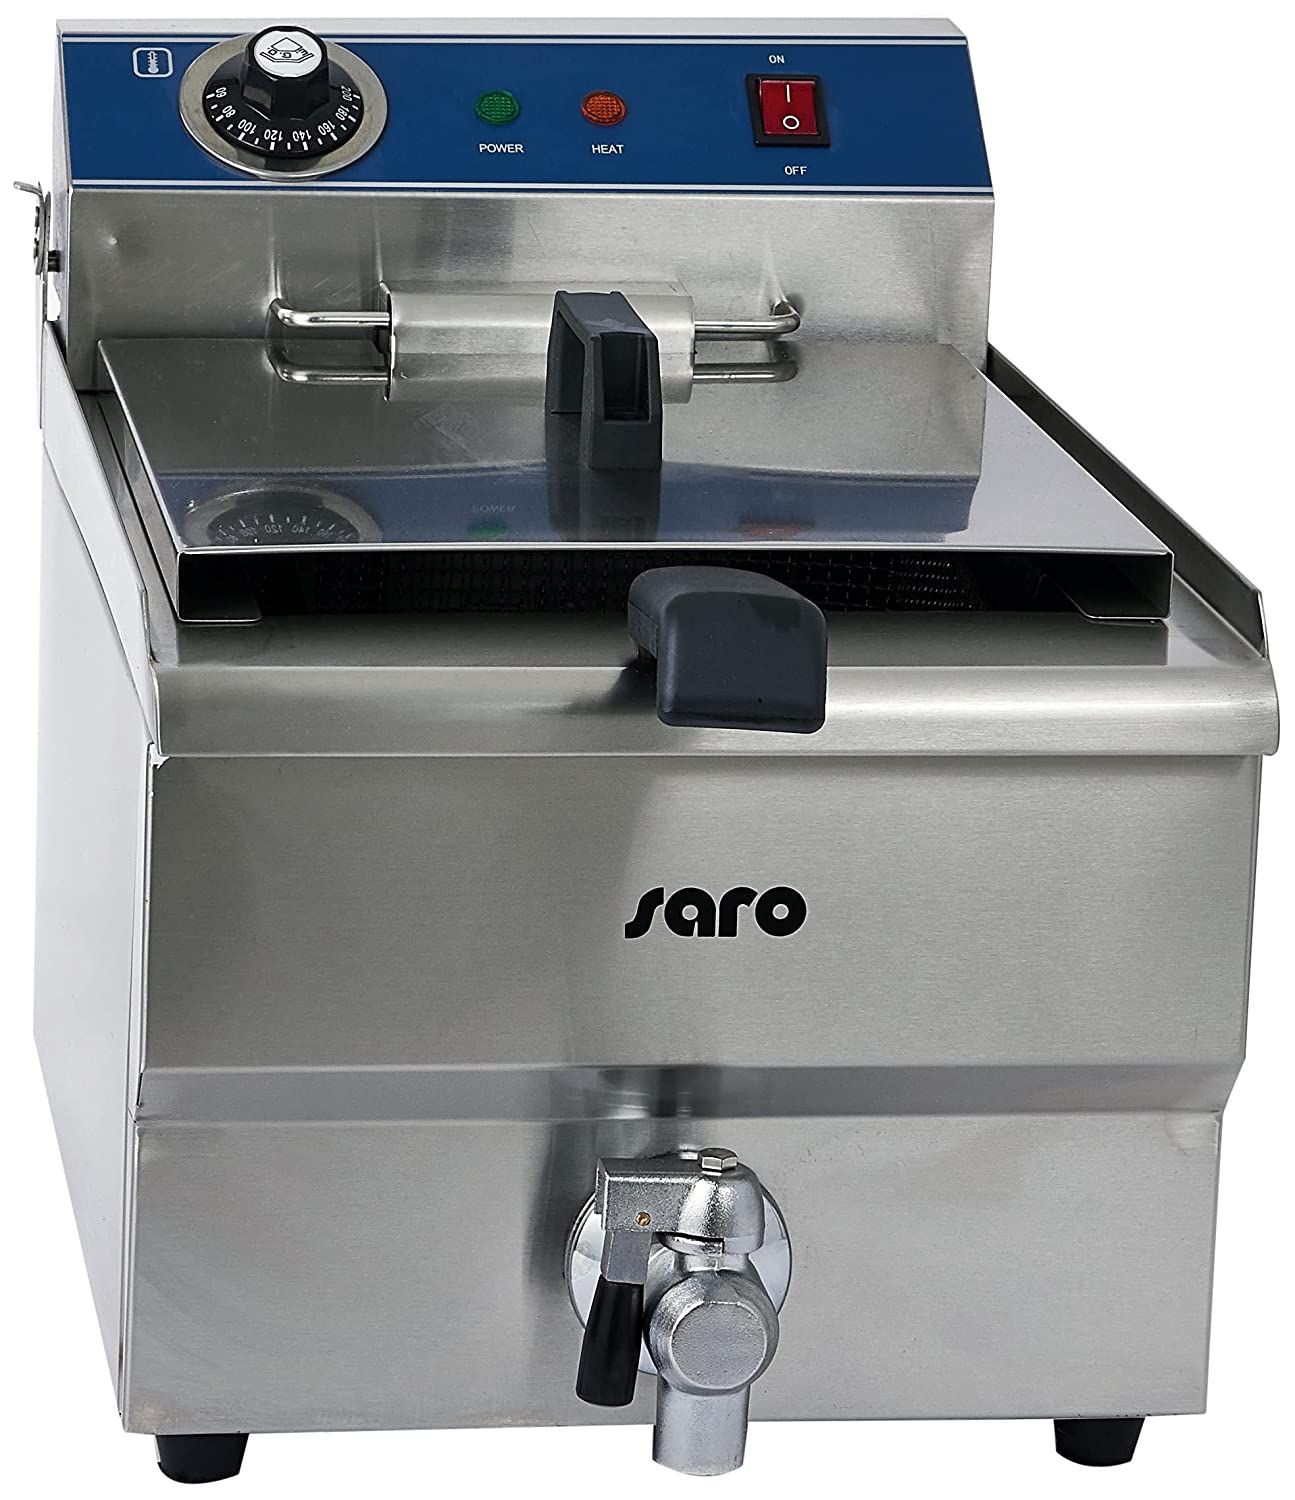 Saro 429-1107 FT 13 Fryer, 13 L, Stainless Steel